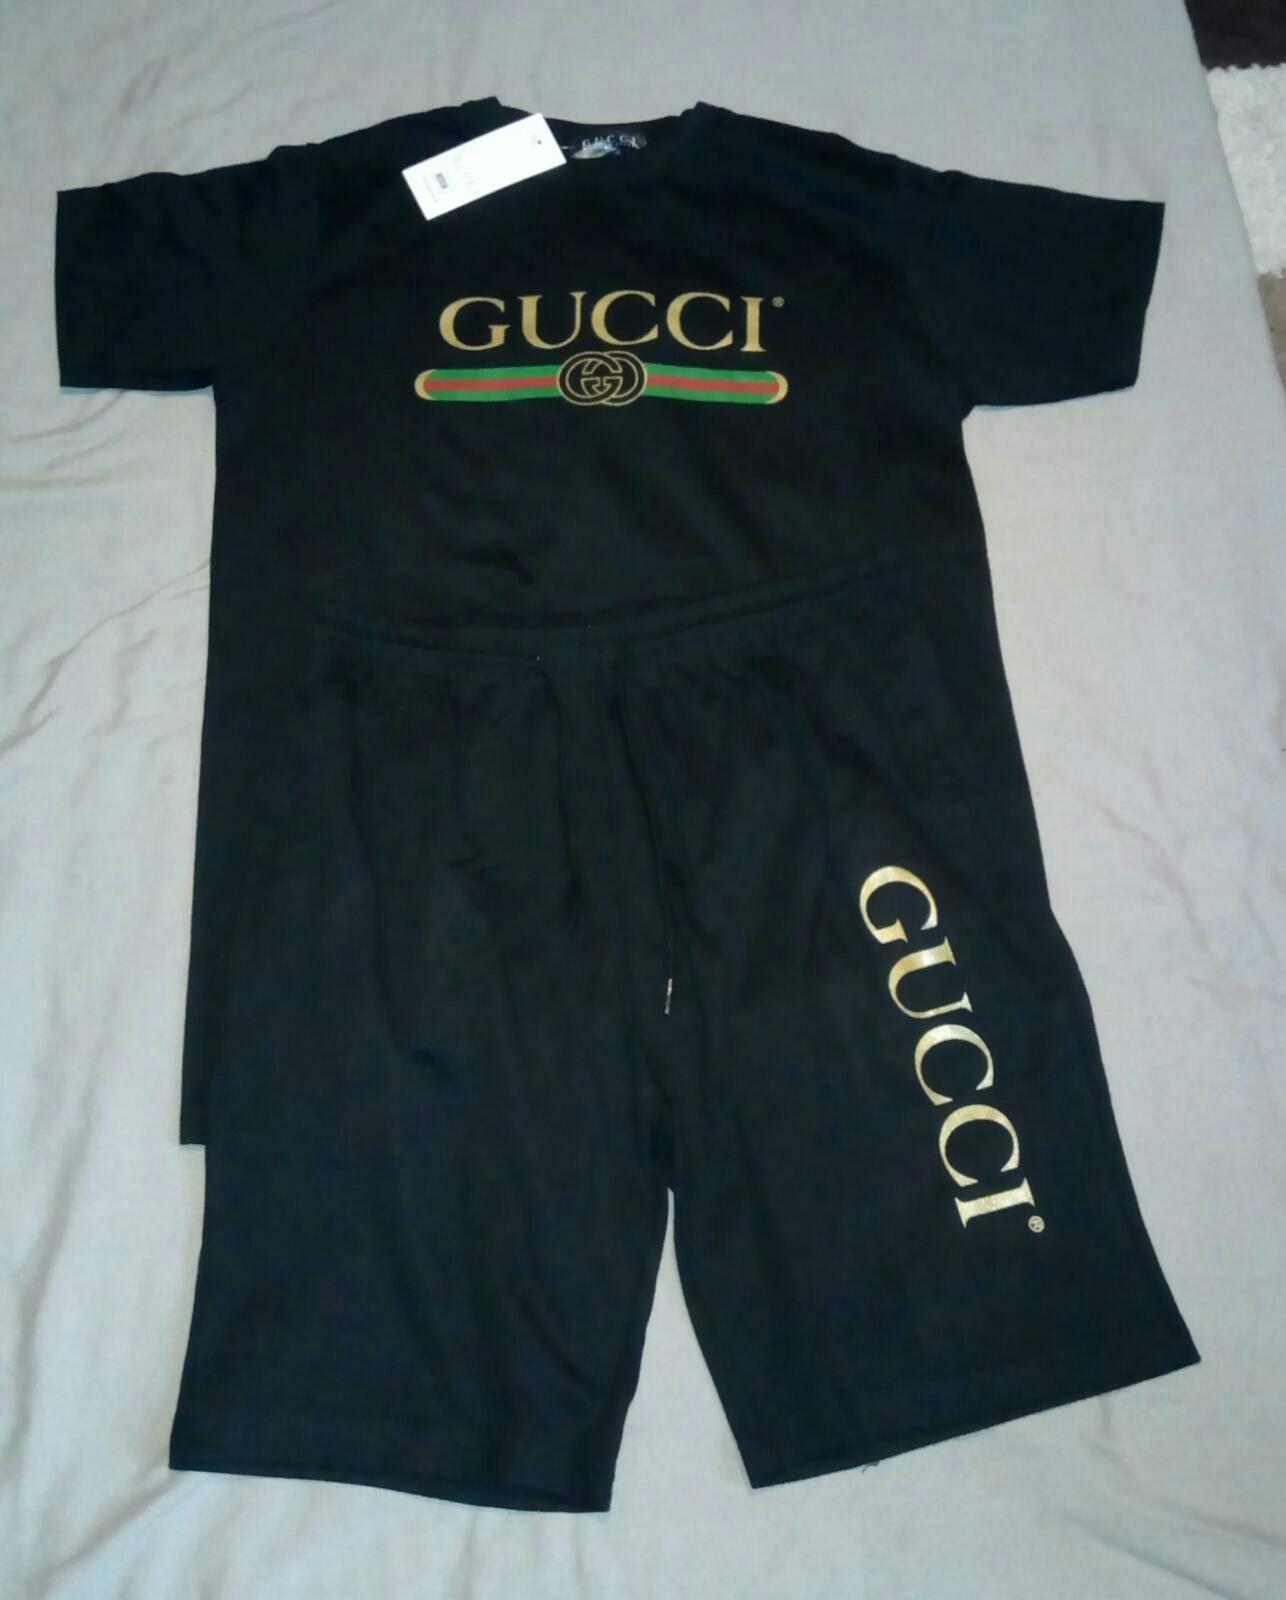 Gucci Clothes For Roblox Buyudum Cocuk Oldum - gucci shirt id for roblox rldm